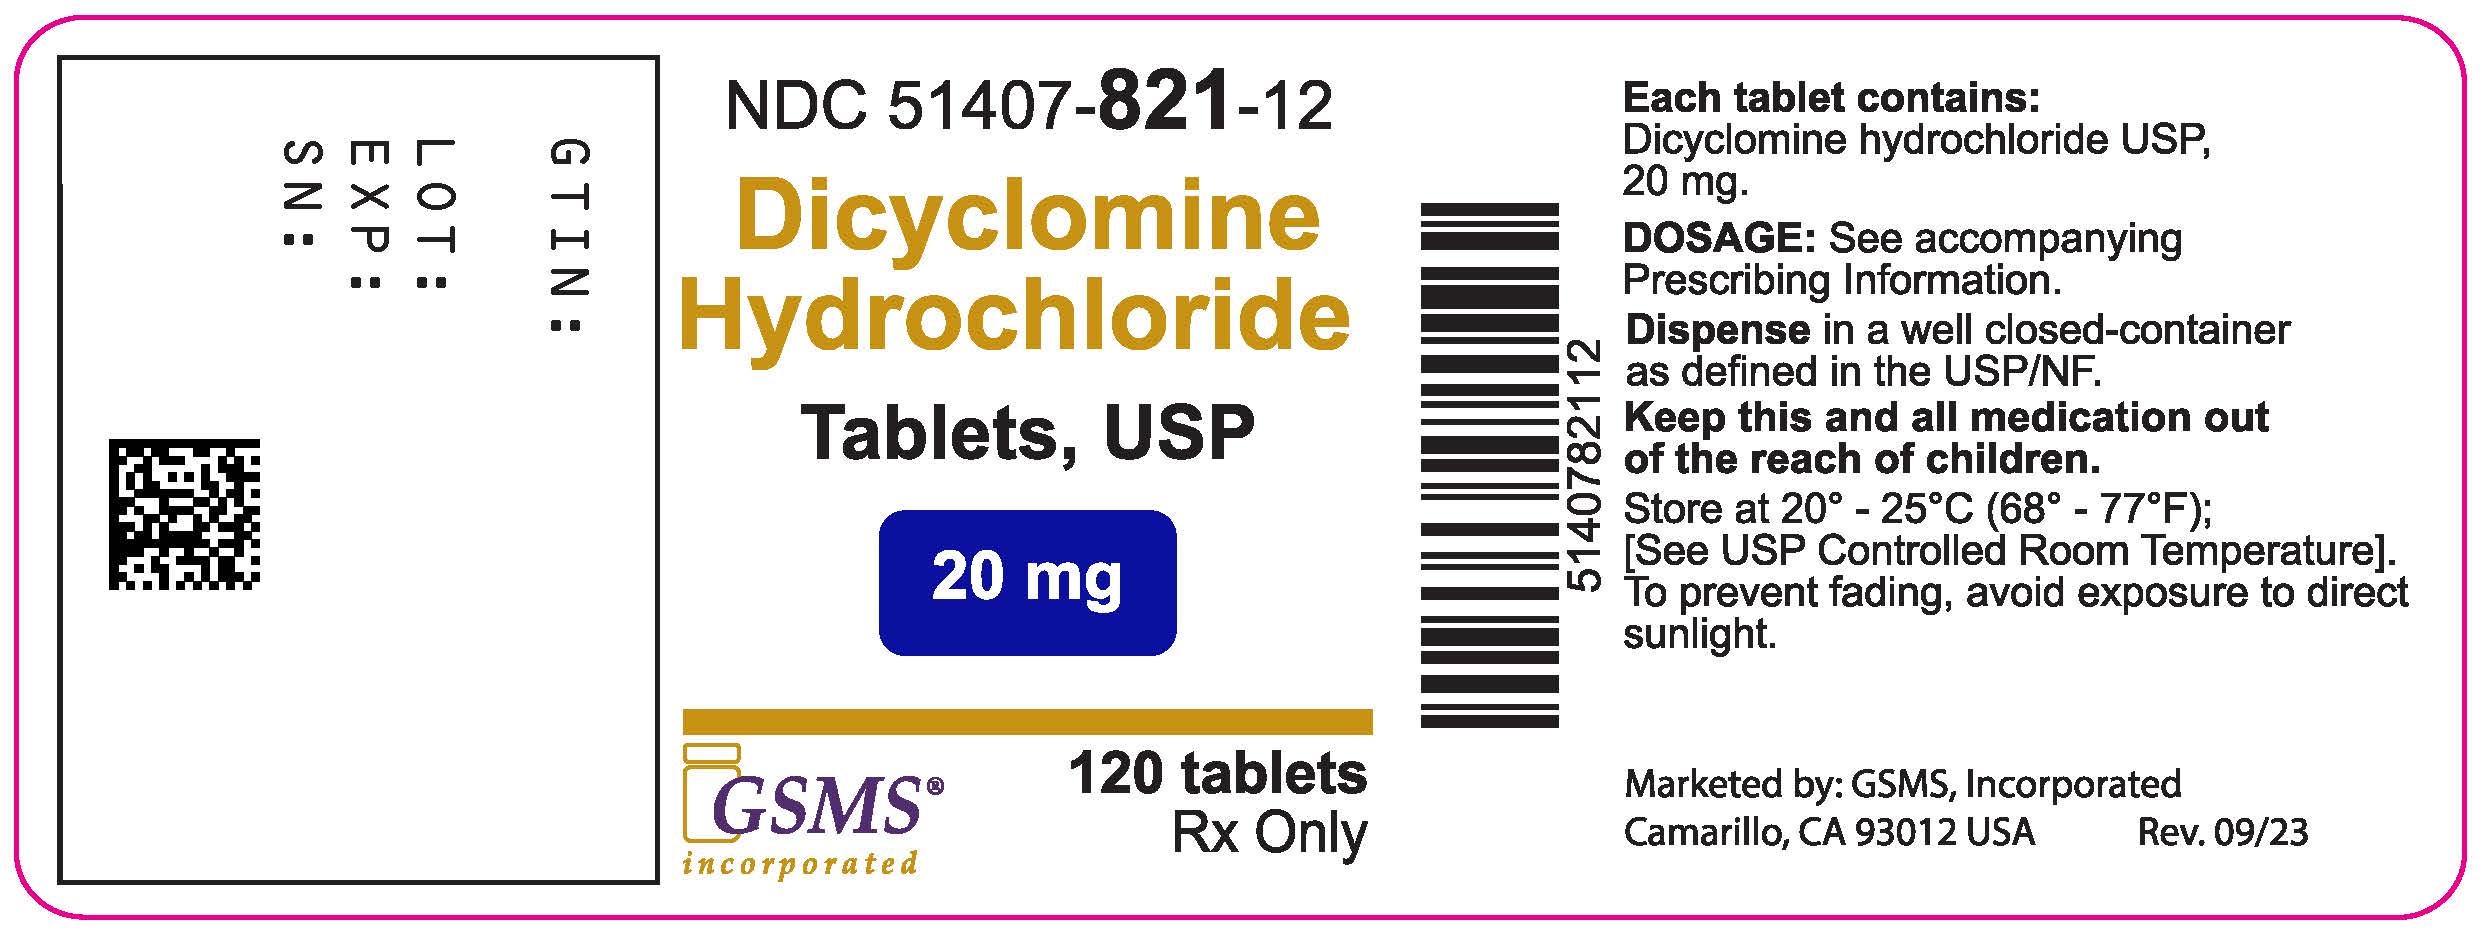 Dicyclomine Hydrochloride Tablets - 51407-821-12LB - TWI - Rev. 0923.jpg